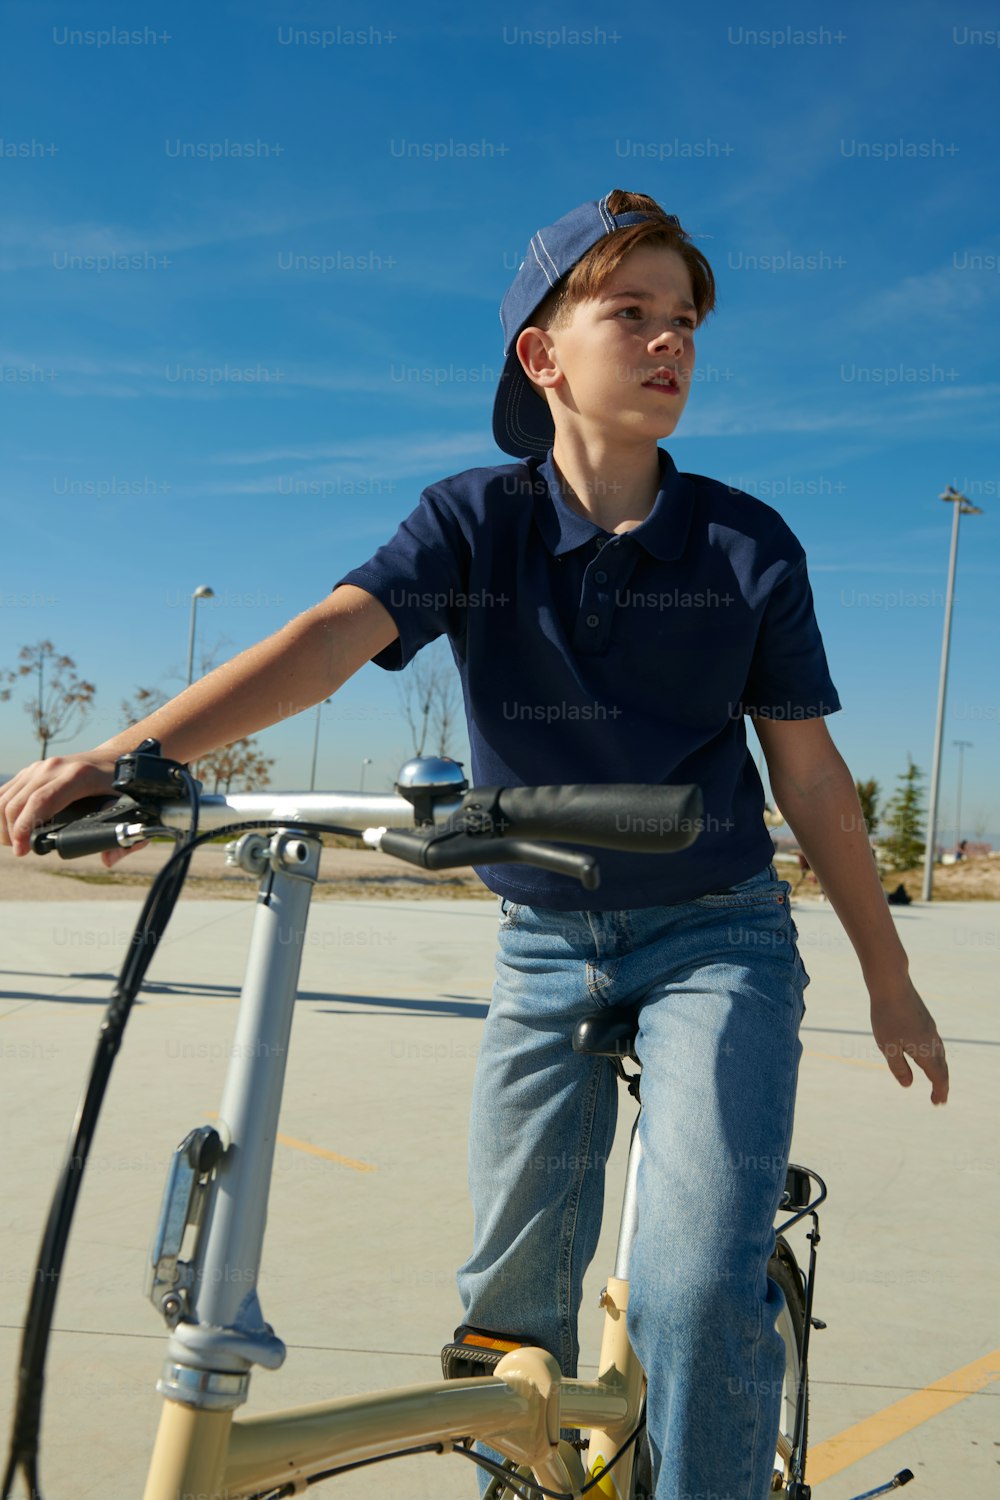 a boy riding a bike in a parking lot